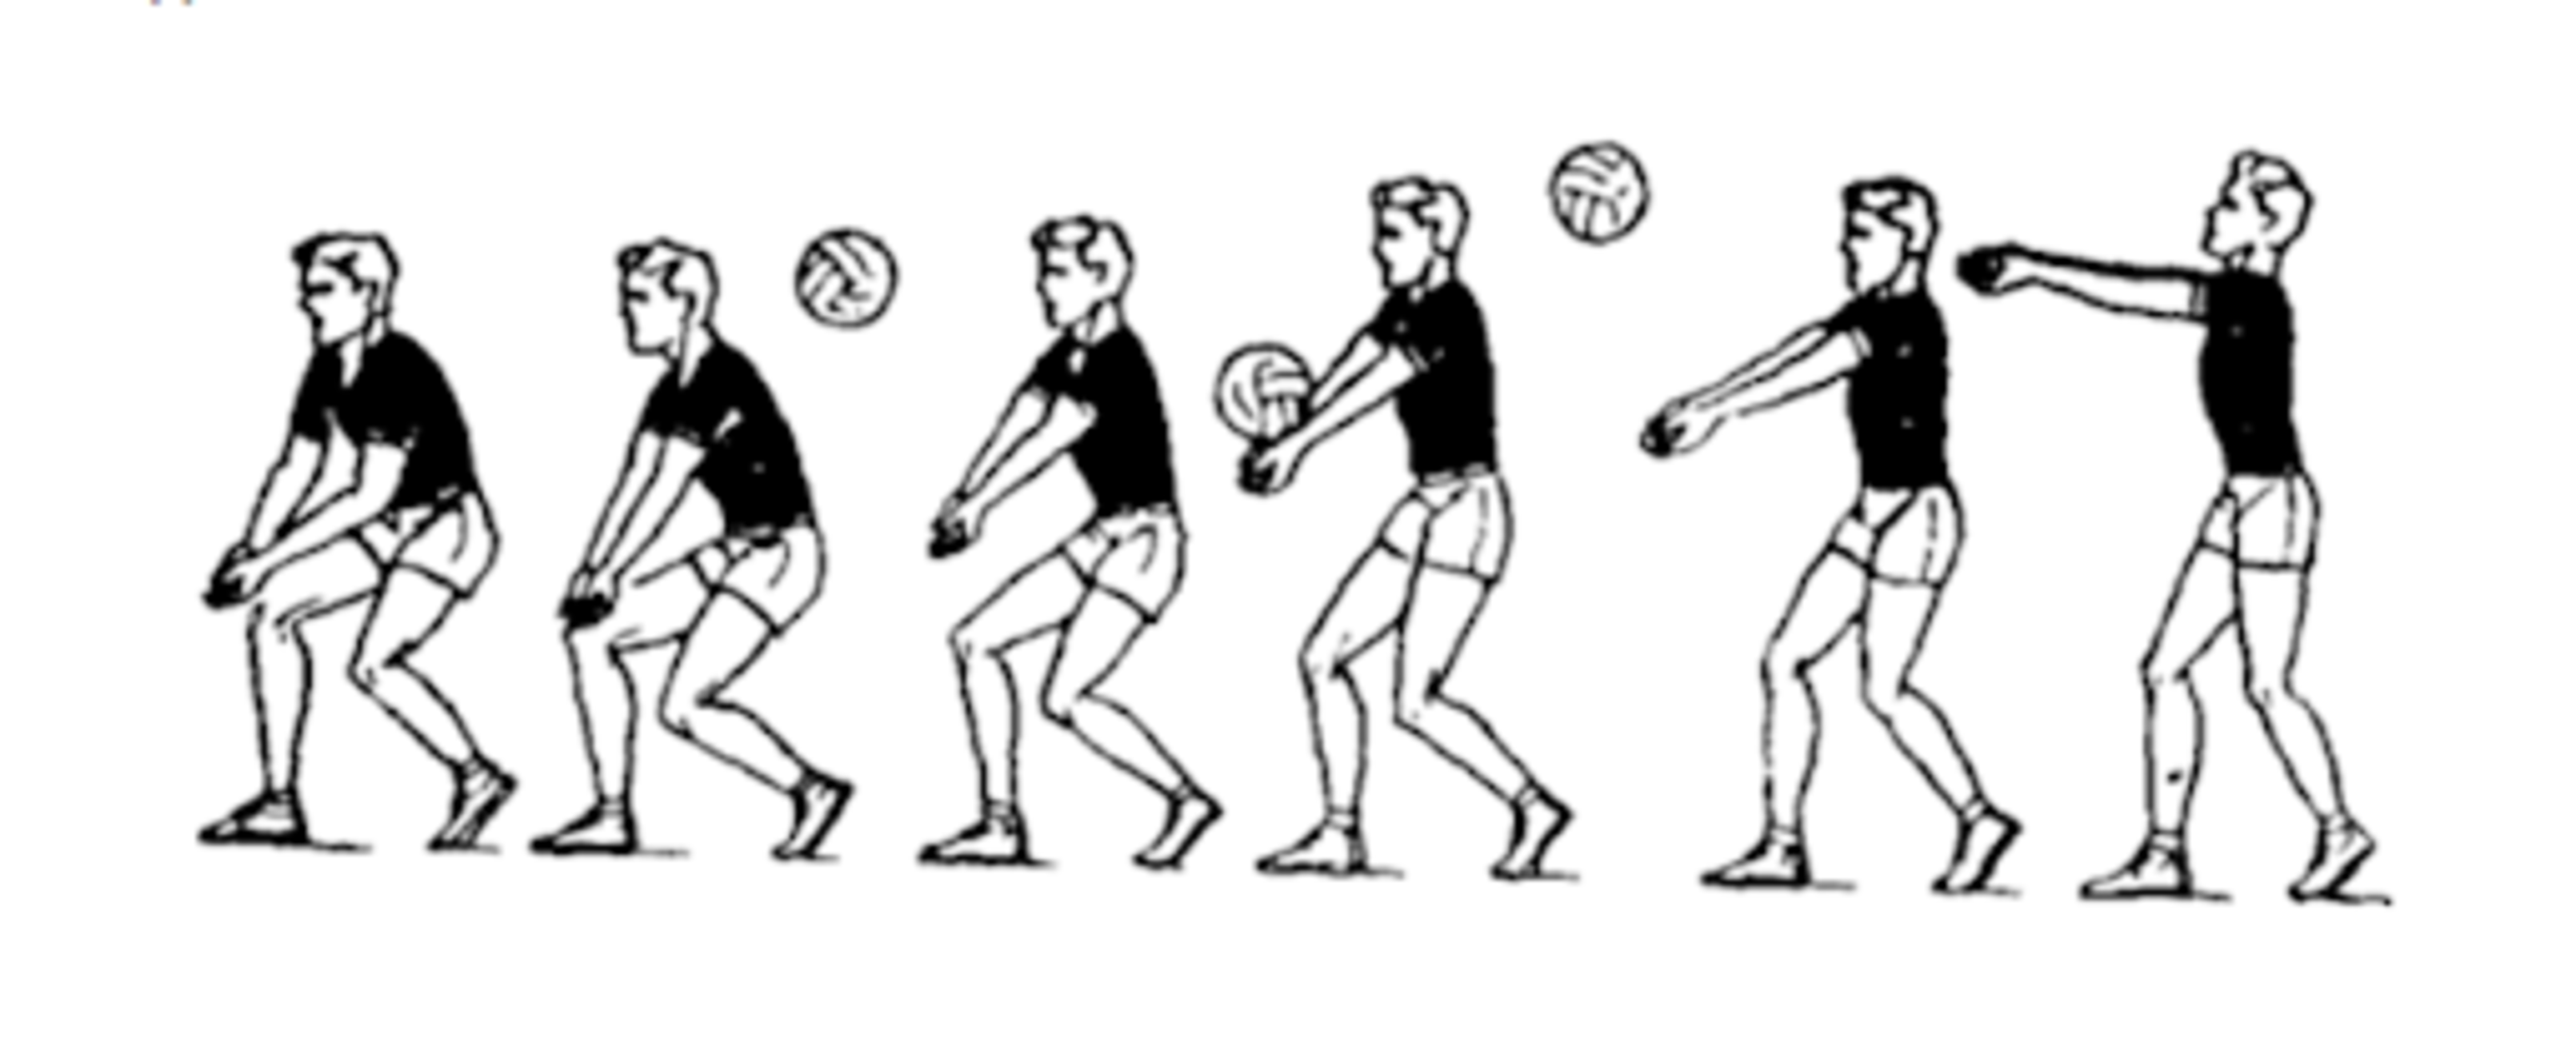 Передача мяча снизу в волейболе. Техника передачи мяча двумя руками снизу в волейболе. Техника приема и передачи мяча снизу двумя руками в волейболе. Приём мяча снизу 2 руками в волейболе. Техника приема мяча снизу двумя руками.